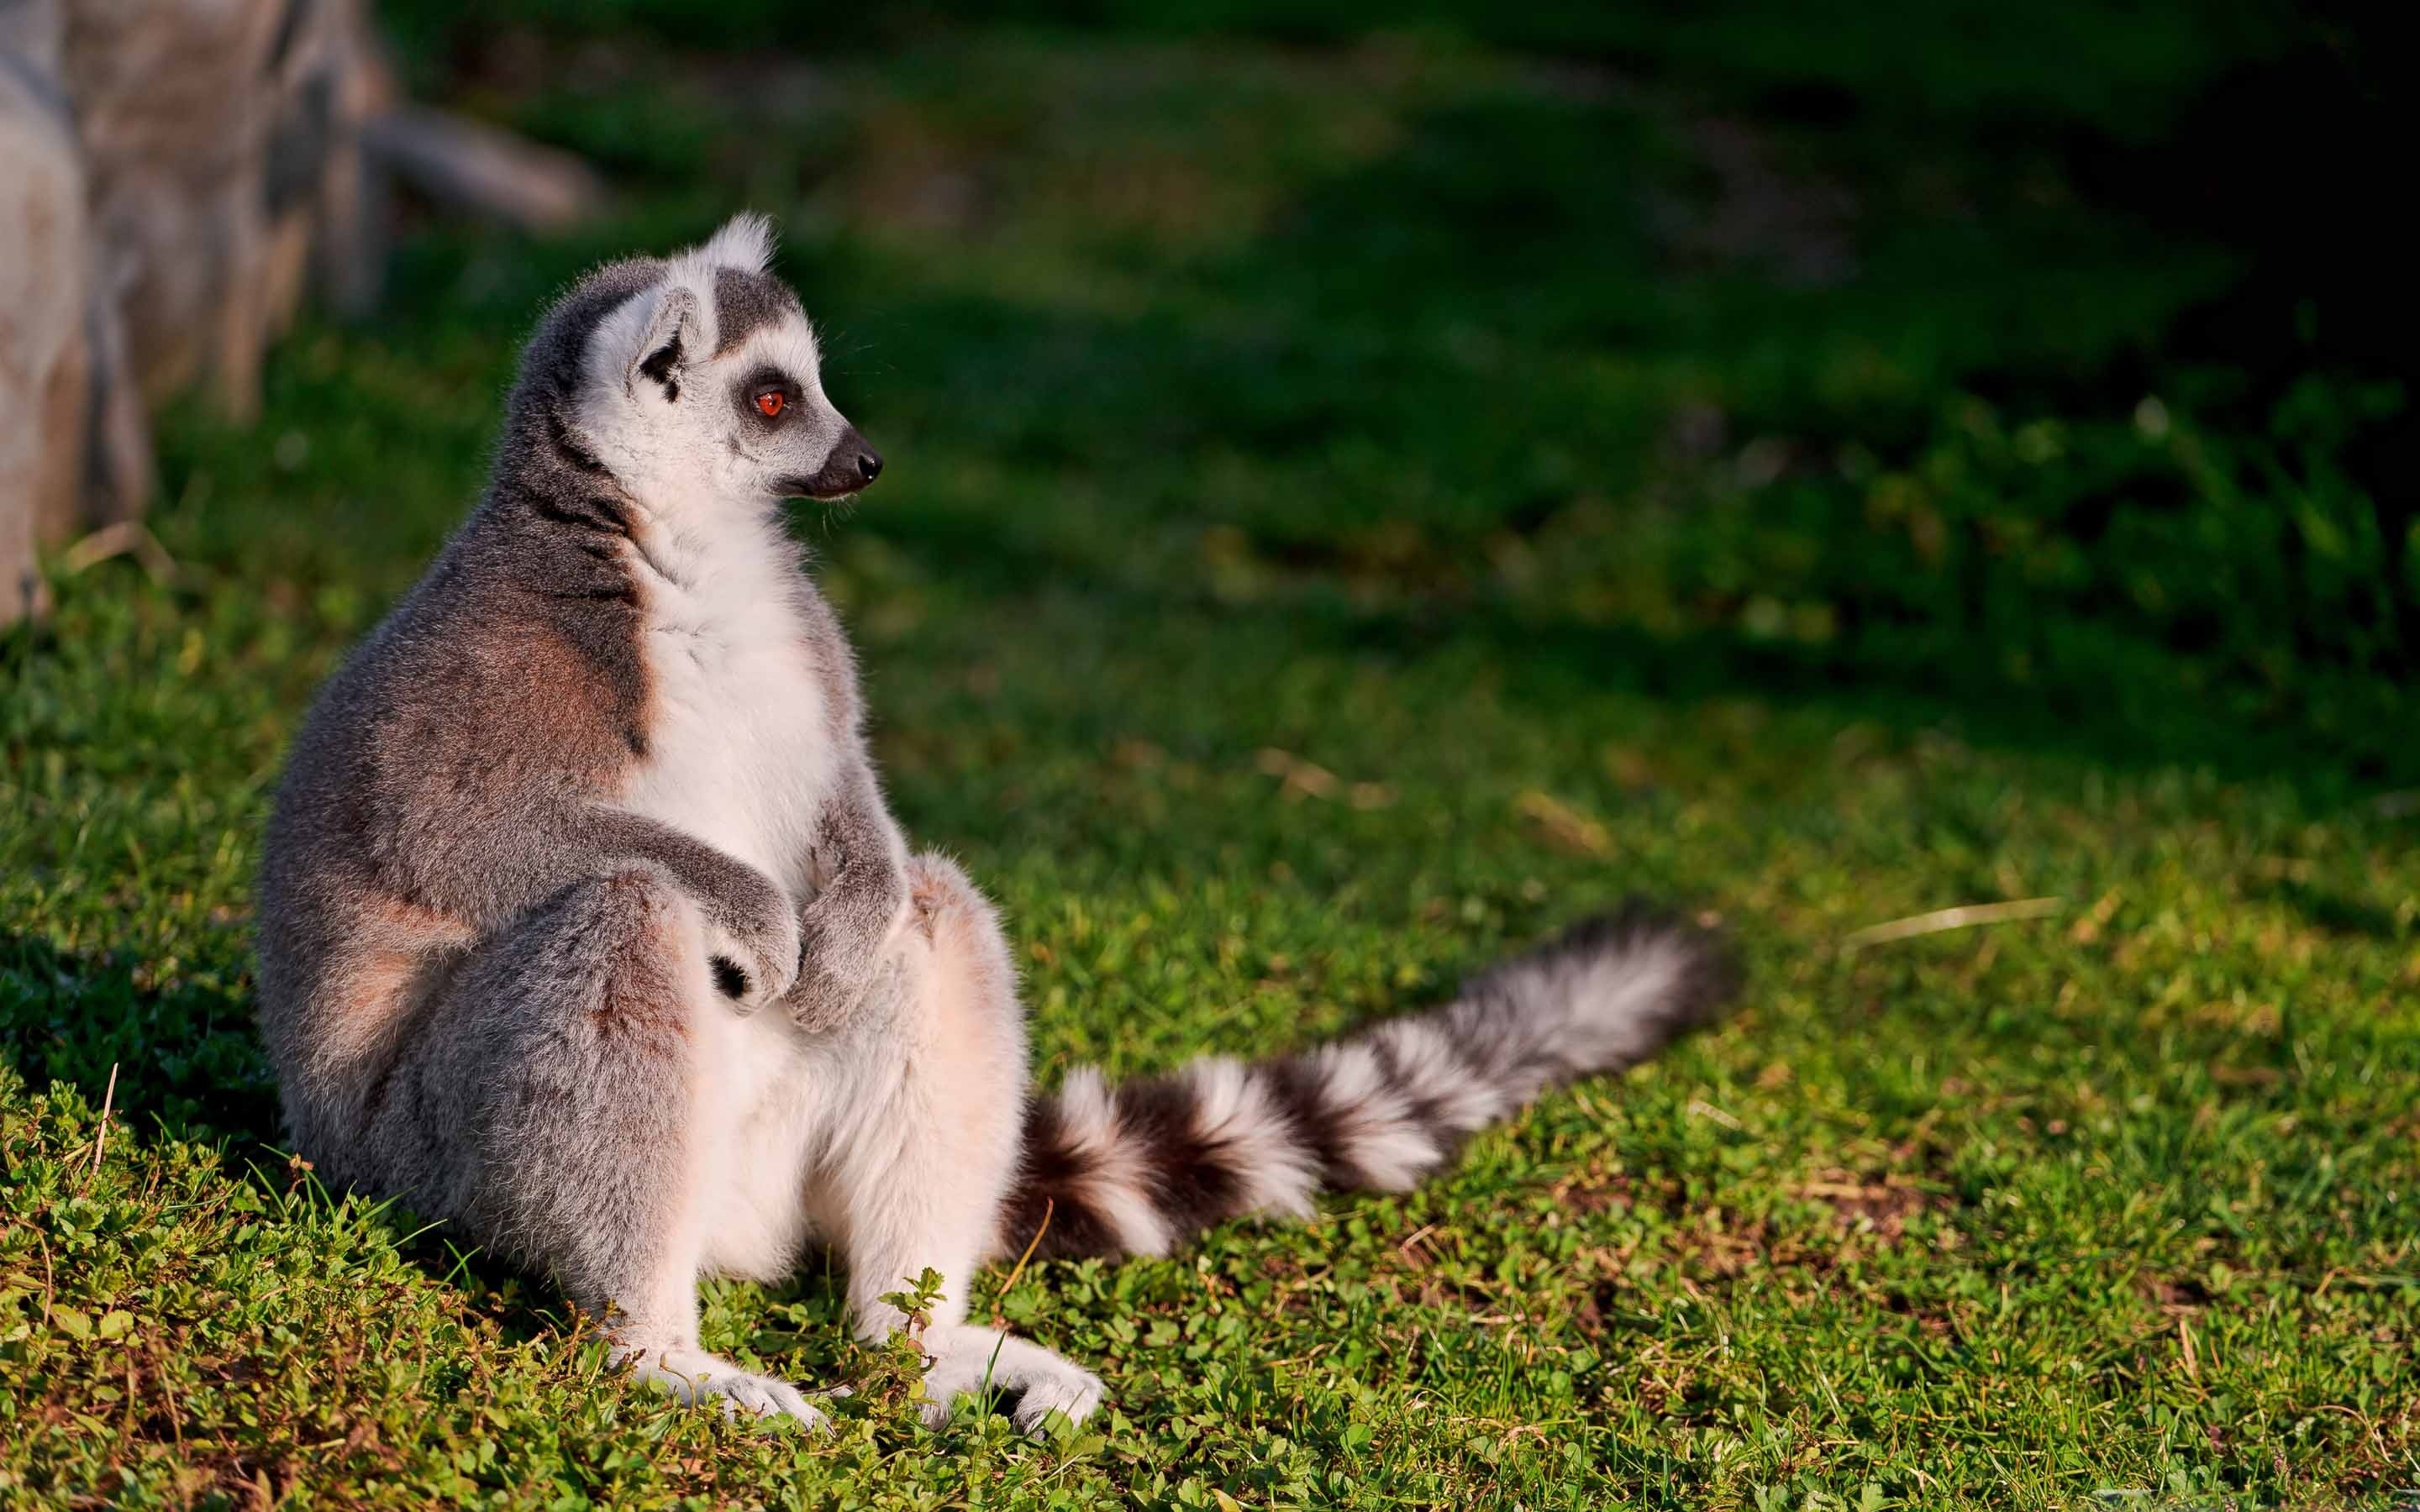 Ring Tailed Lemur, MacBook Air wallpaper, Wildlife enthusiast's delight, Madagascar's gem, 2880x1800 HD Desktop